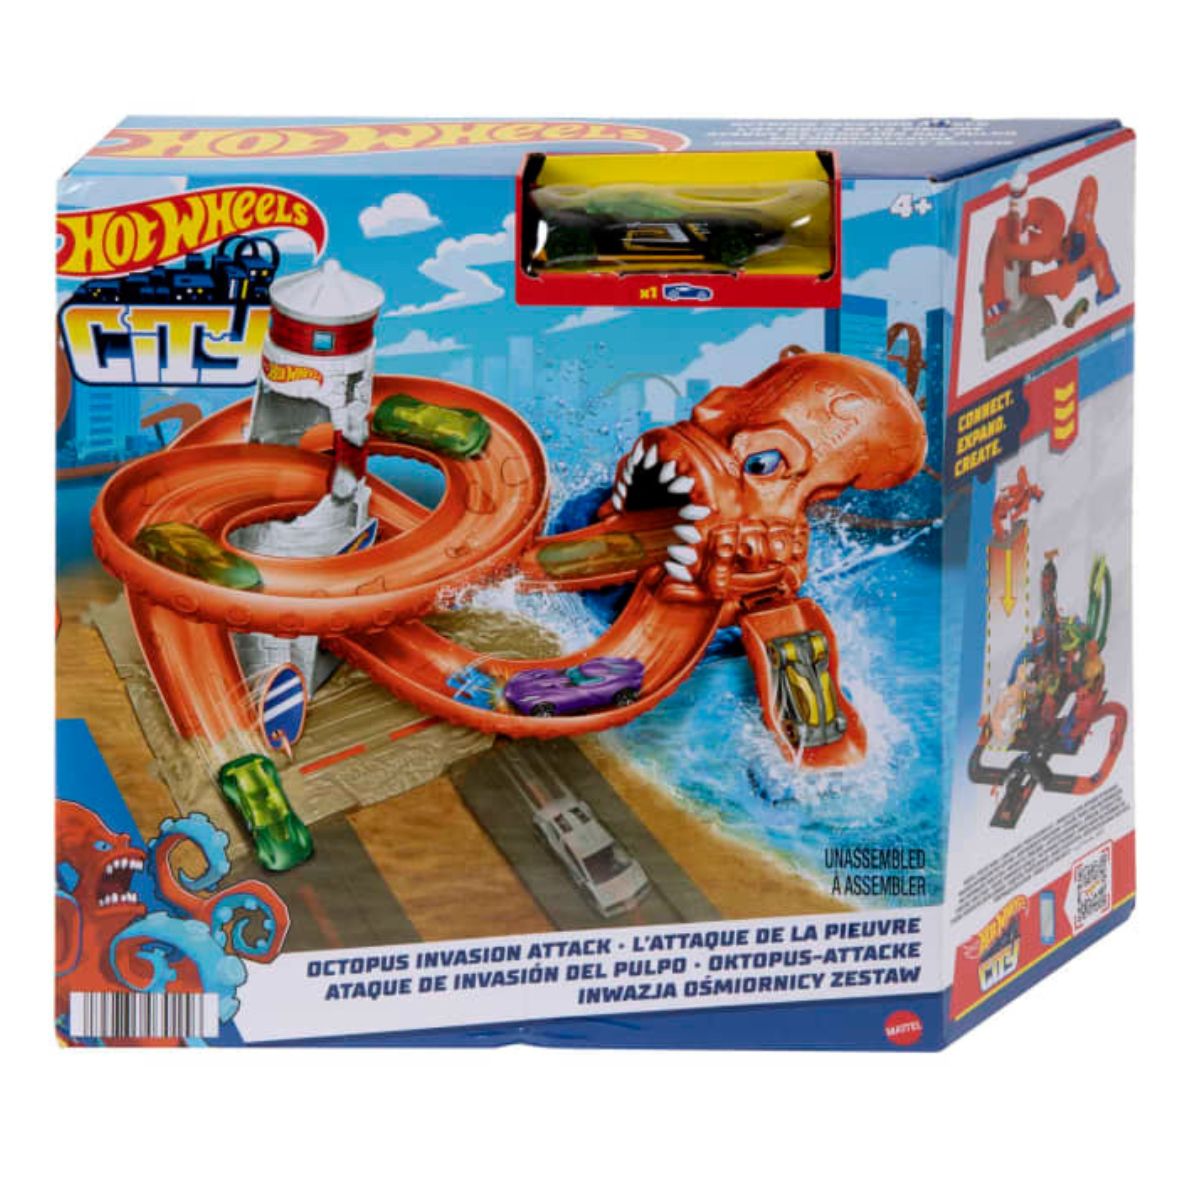 City Octopus Invasion Attack Playset